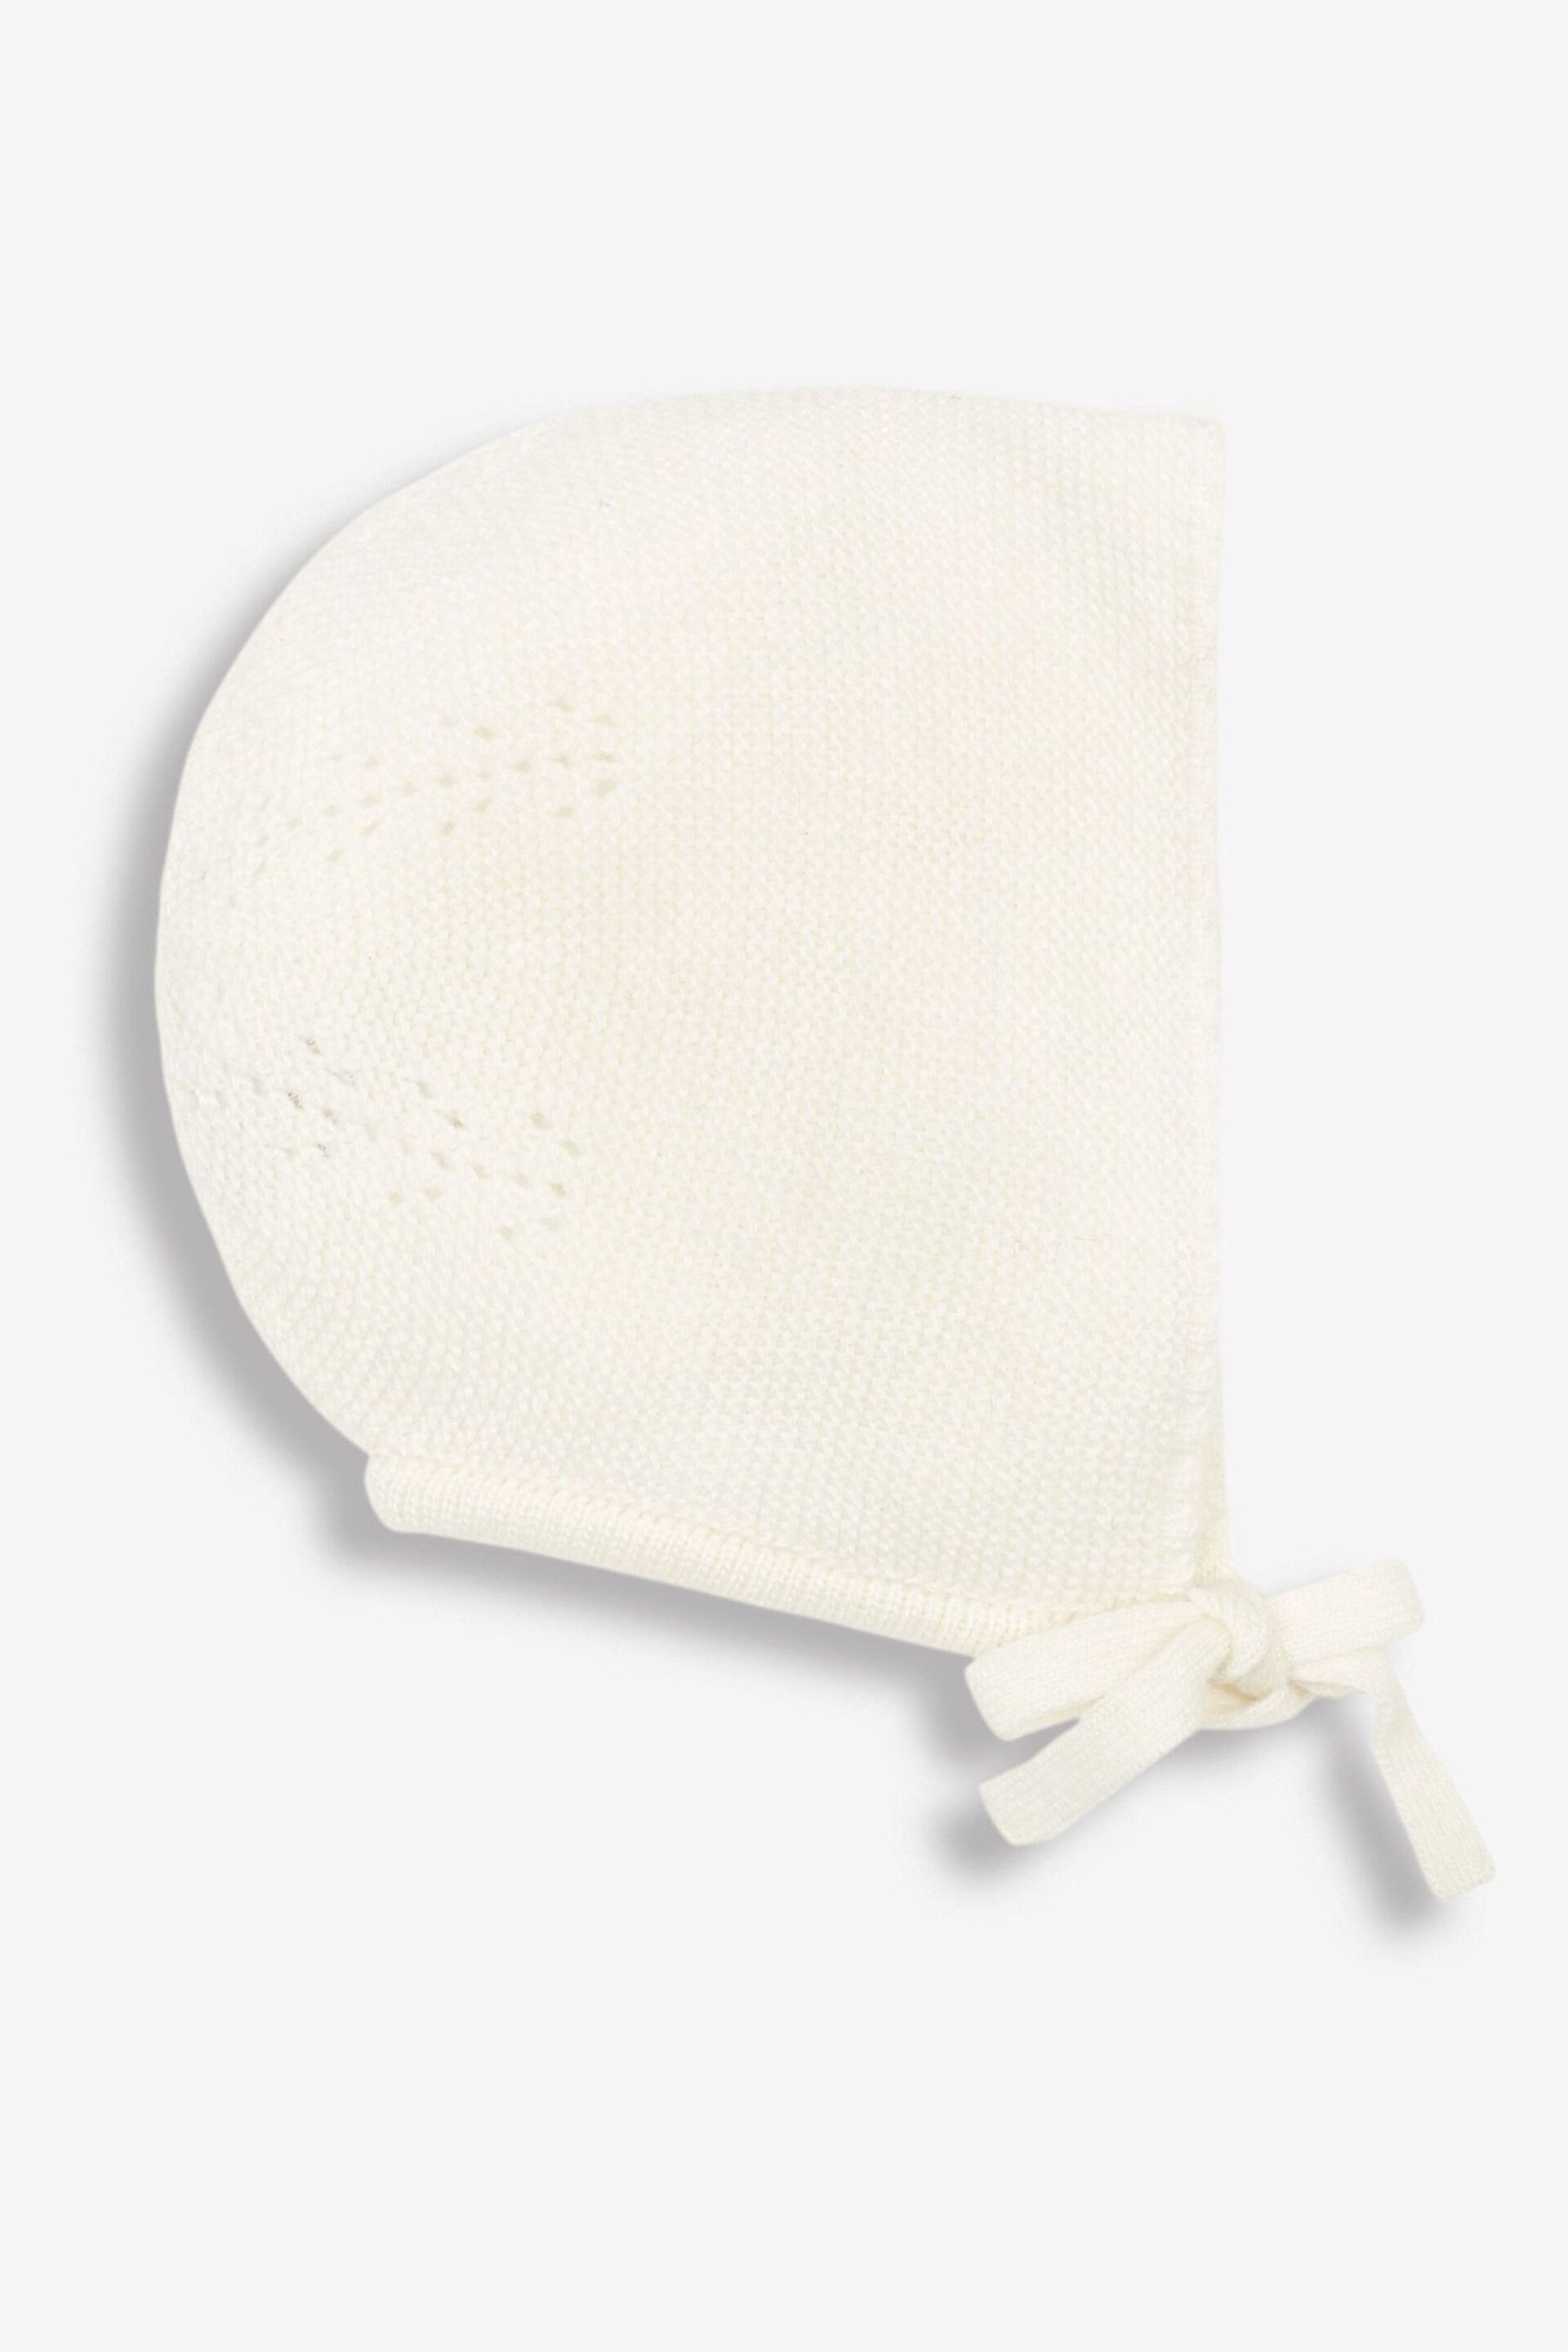 JoJo Maman Bébé Cream Knitted Baby Bonnet - Image 1 of 1